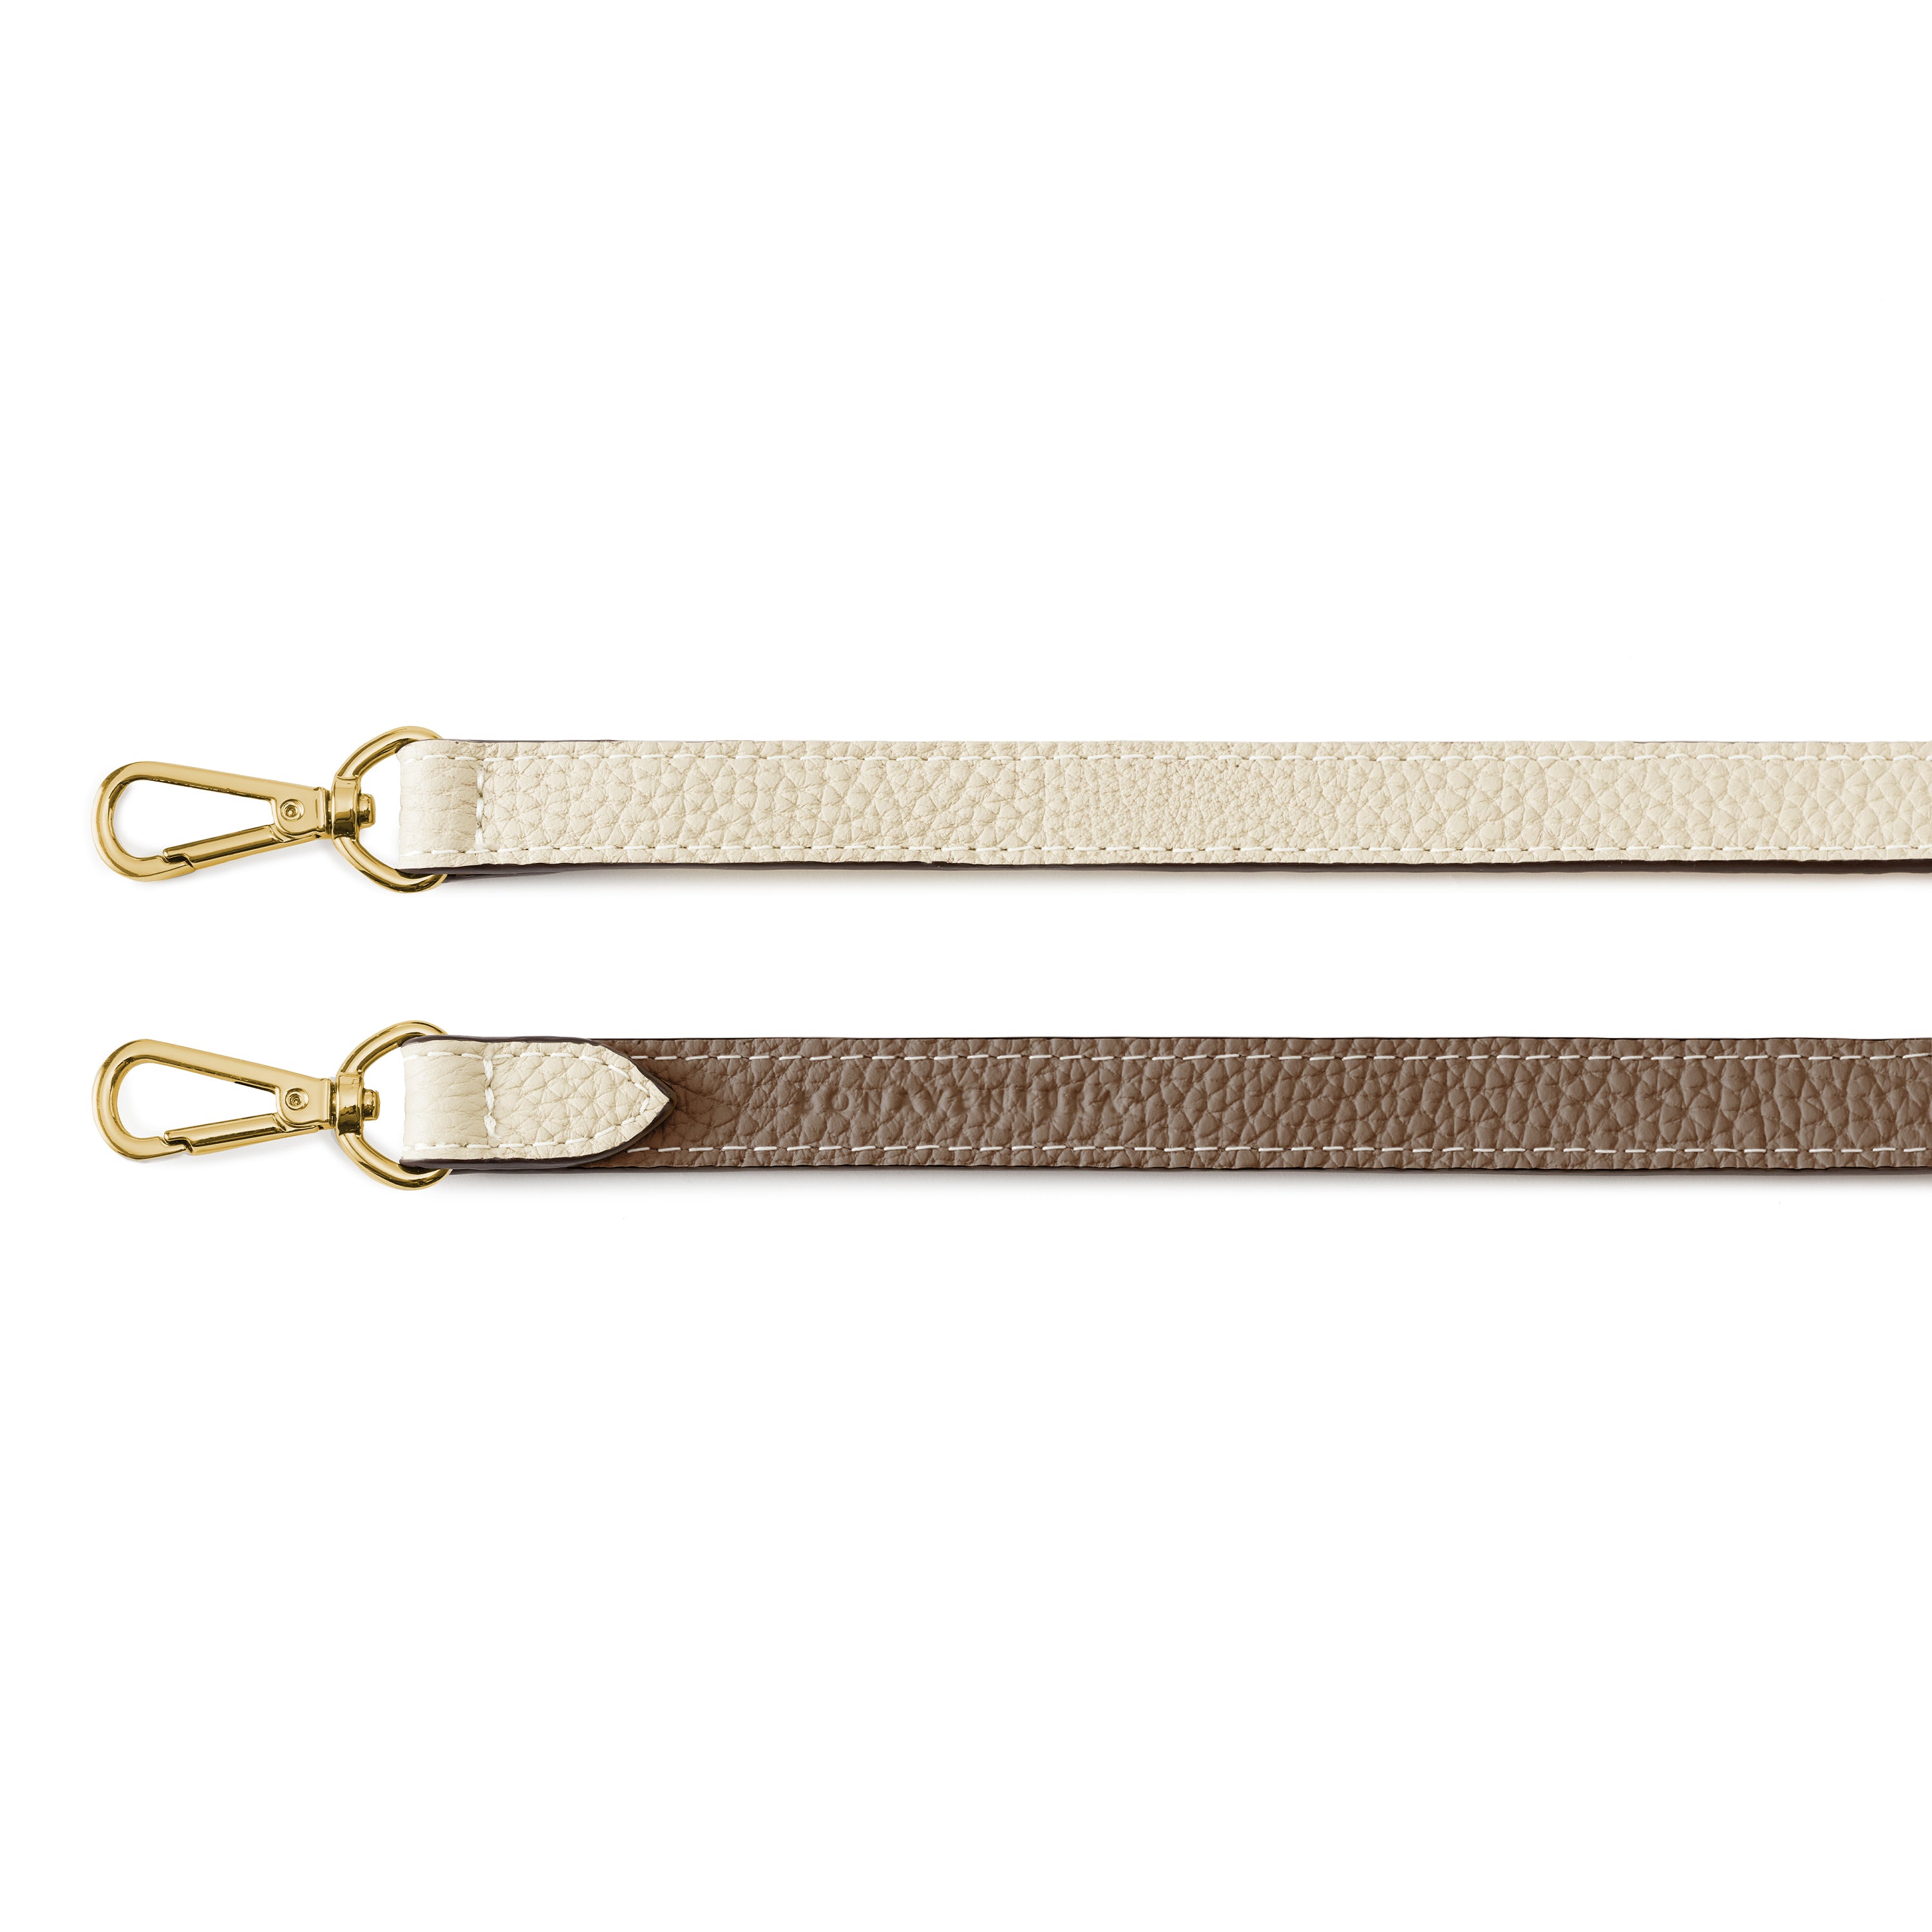 Shoulder strap with handle, shrink leather for back cover (gold)